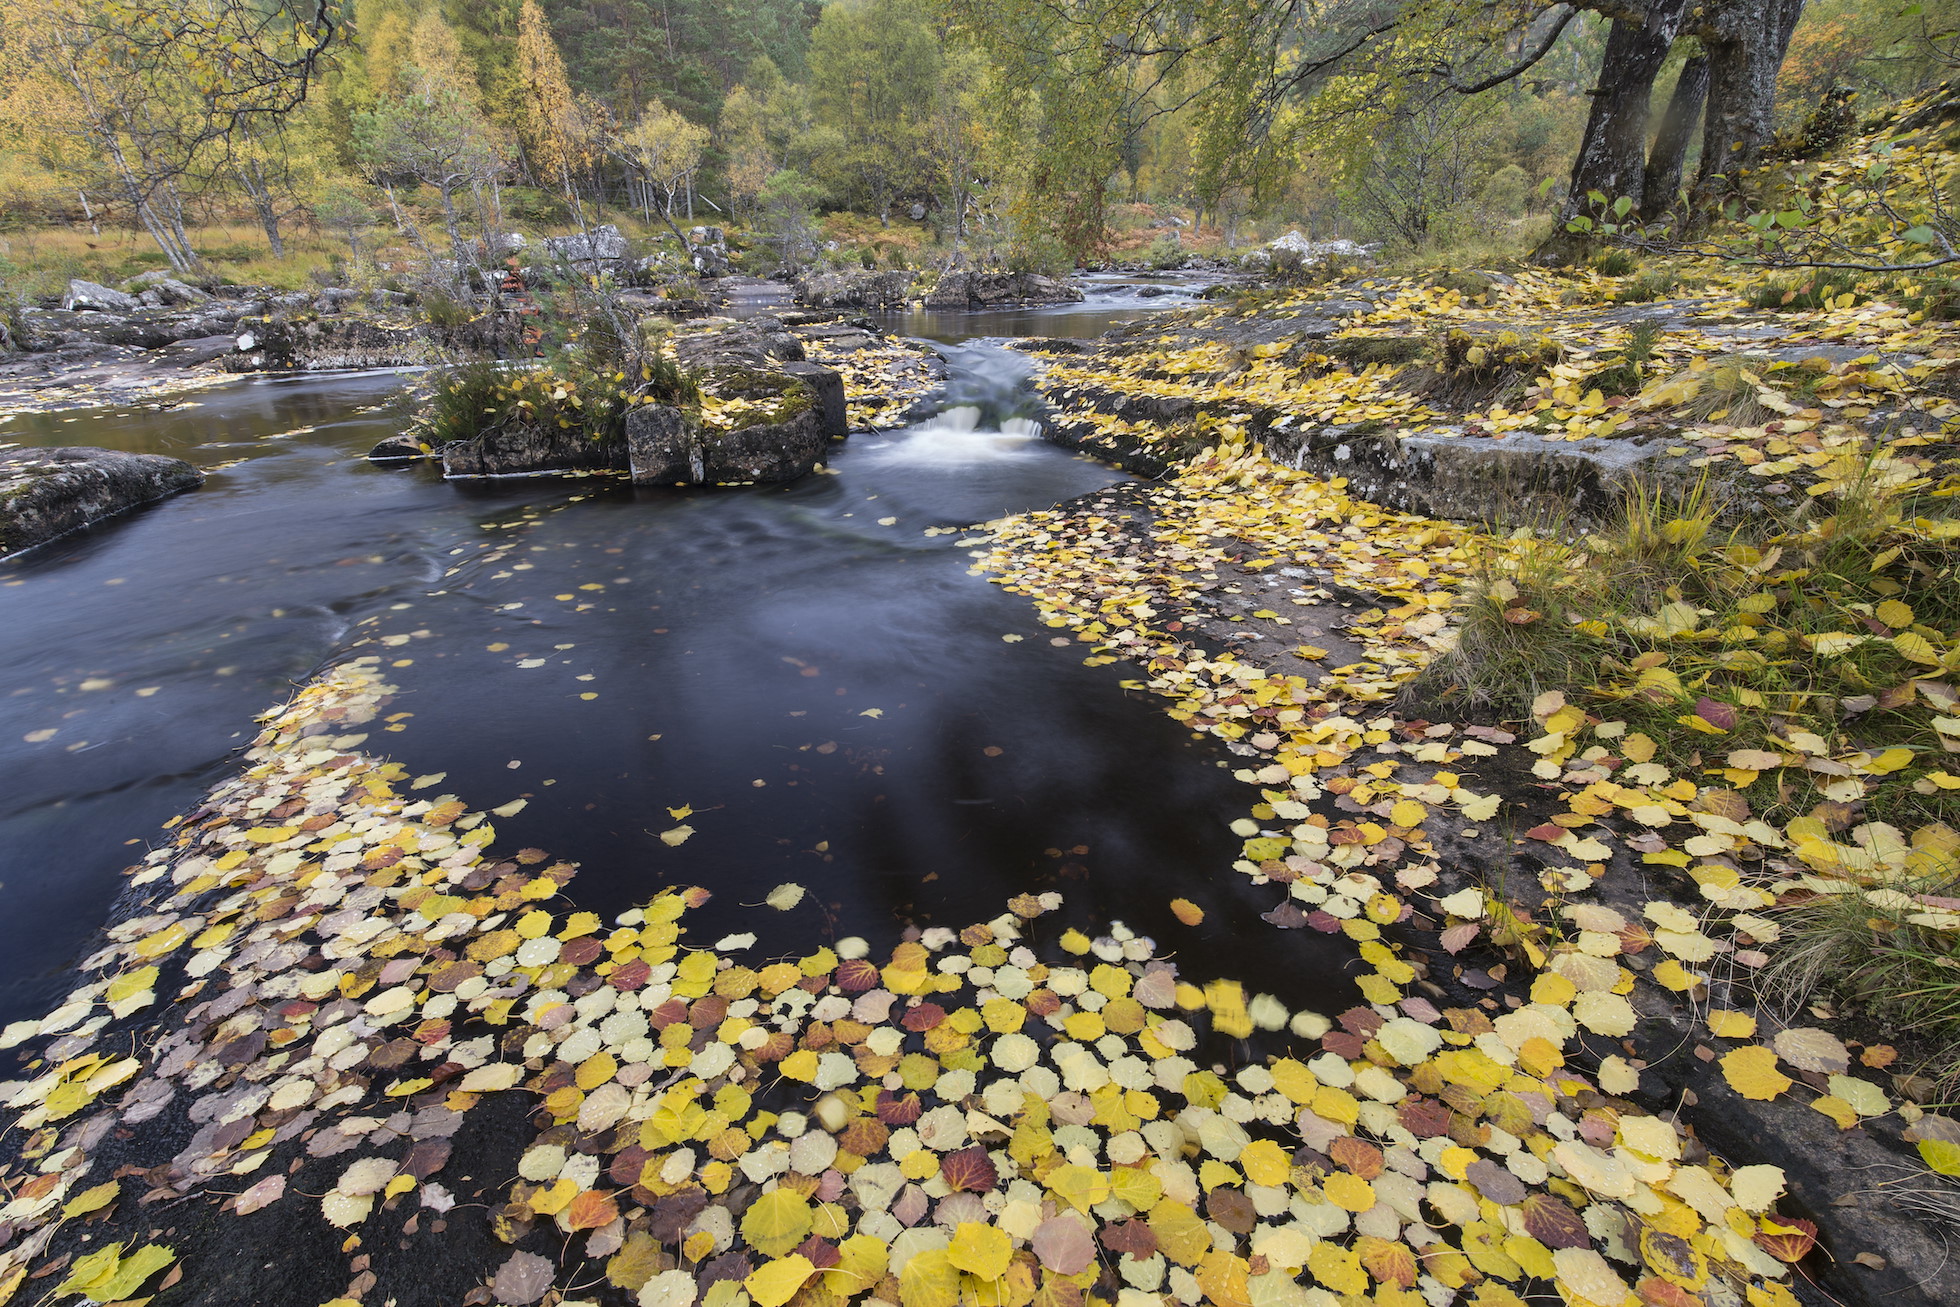 River Cannich in autumn with fallen aspen leaves, Scotland.